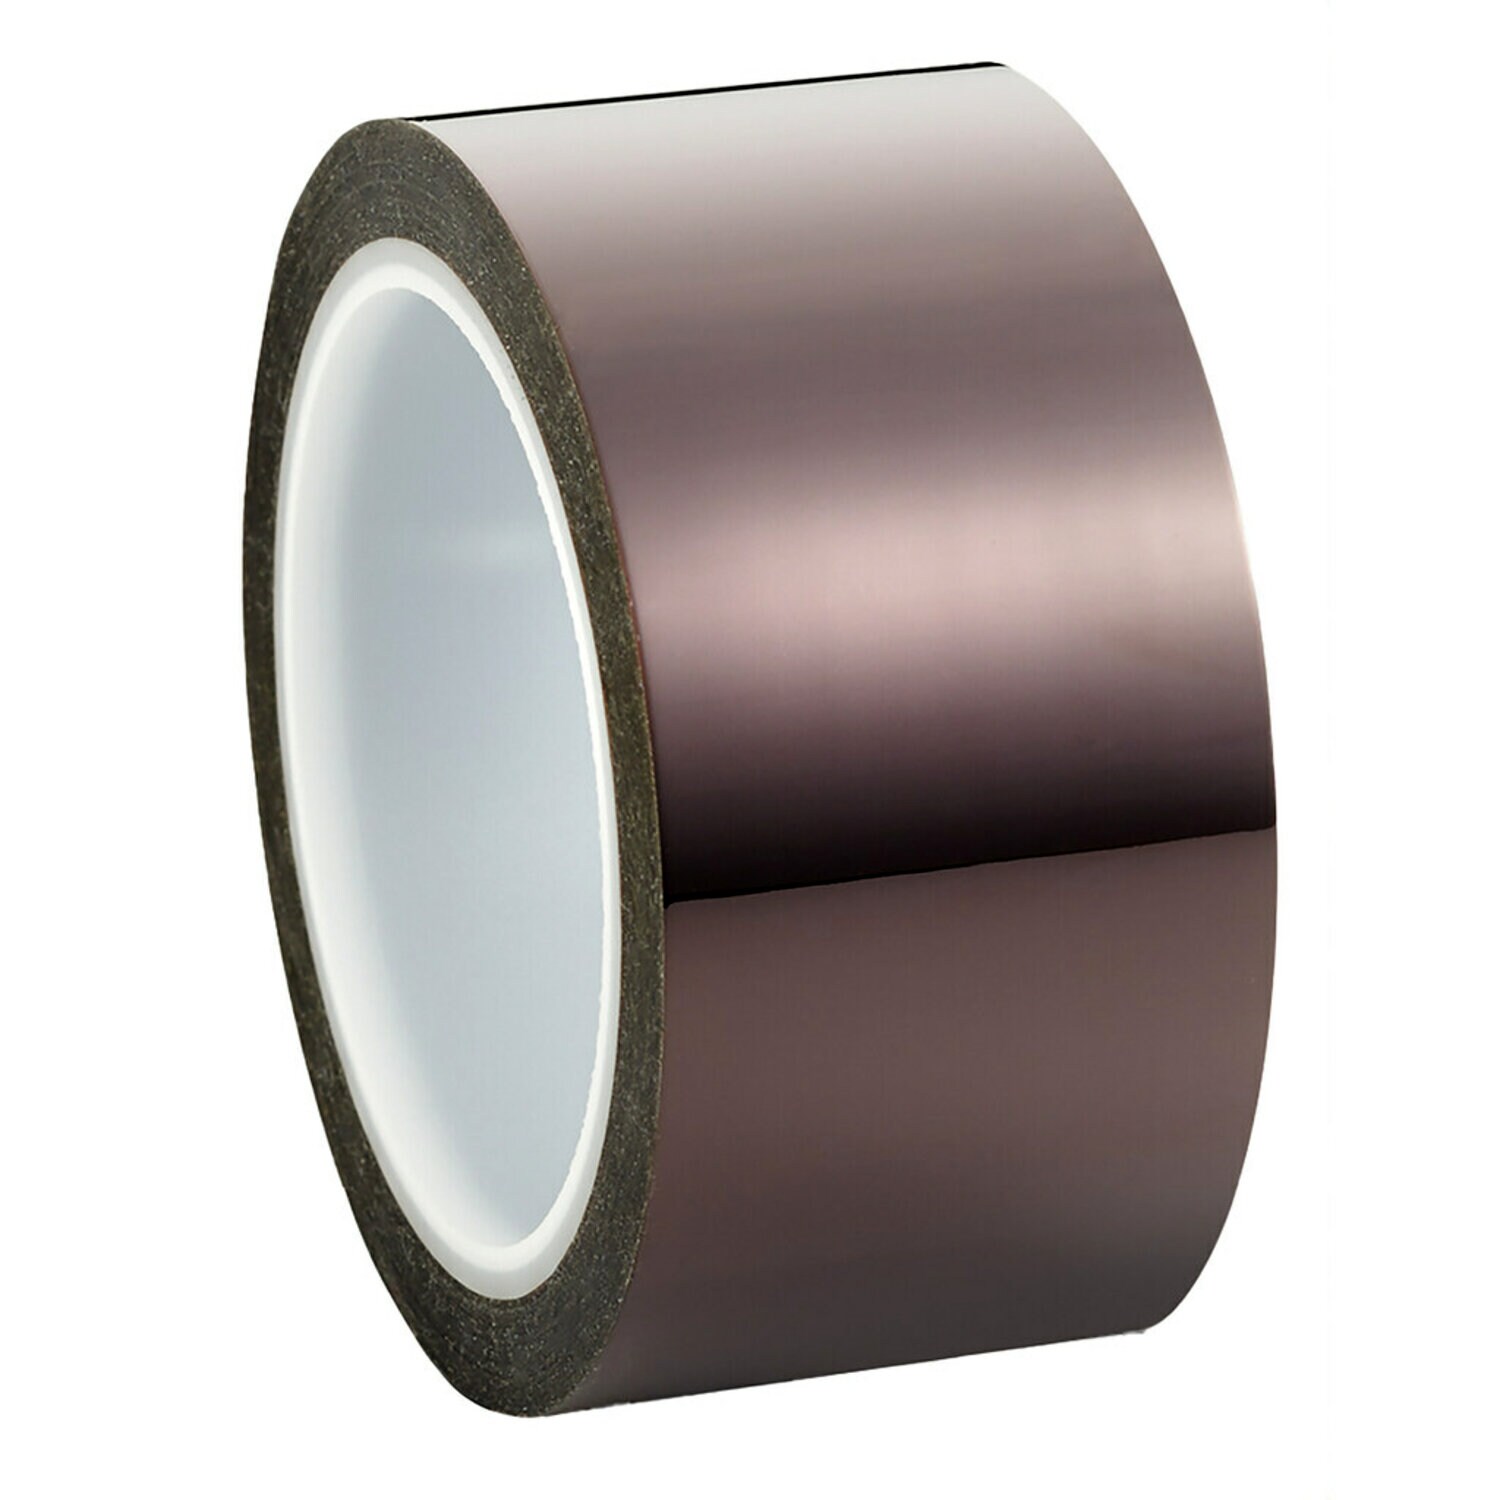 7100059612 - 3M Polyimide Tape 8998, Dark Amber, 4 in x 36 yd, 3.3 mil, 8 rolls per
case